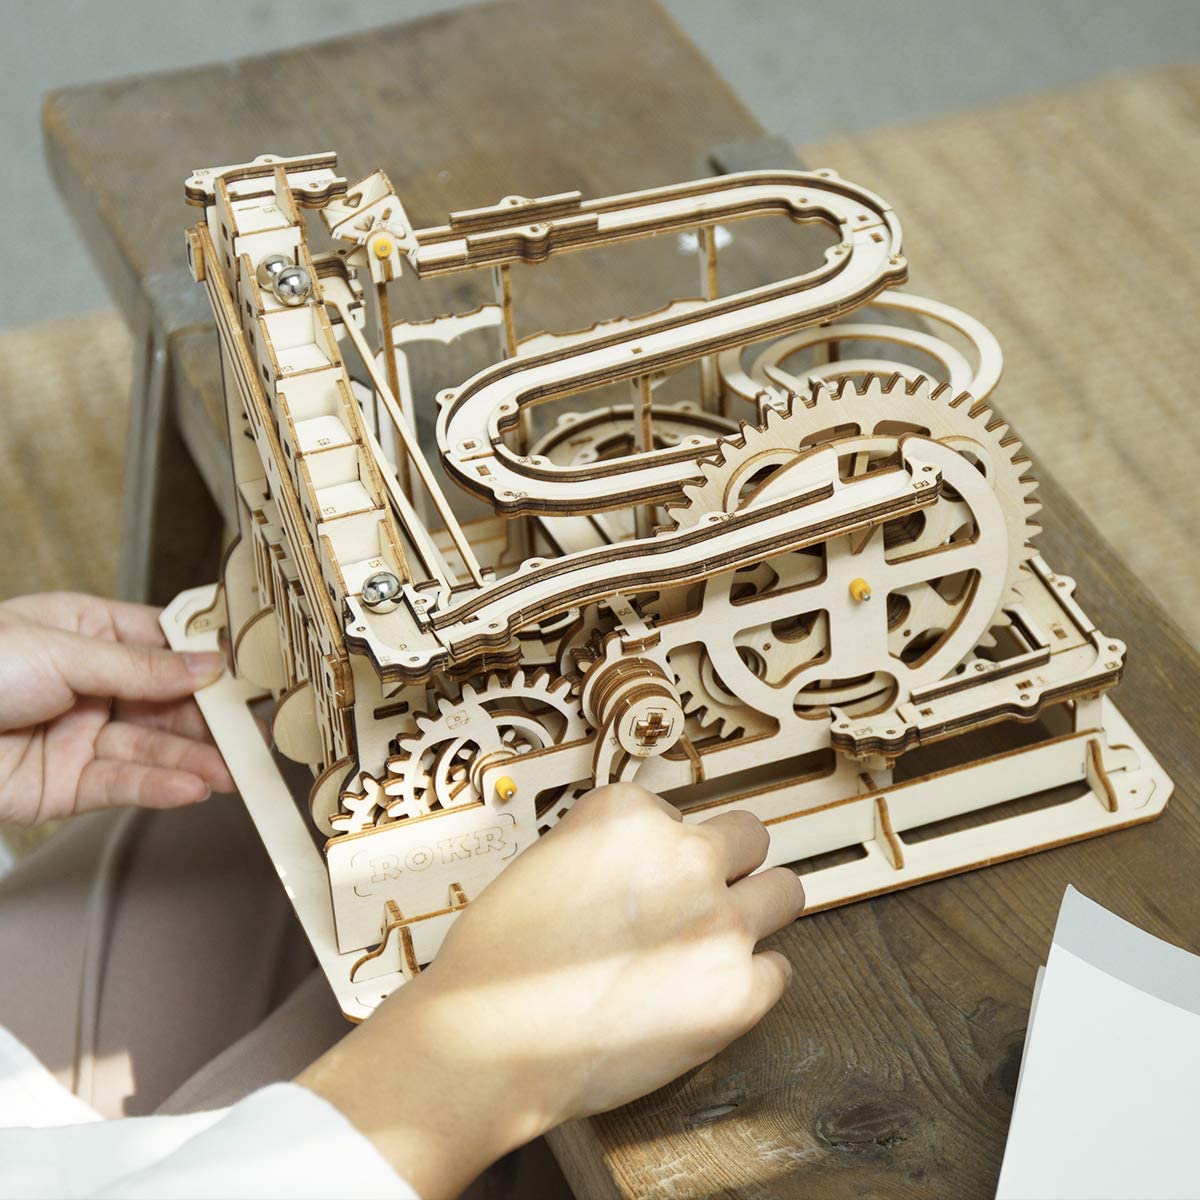 DIY Wooden Marble Run with Waterwheel Model Building Kit by Robotime Rokr - 238pcs - ToylandEU